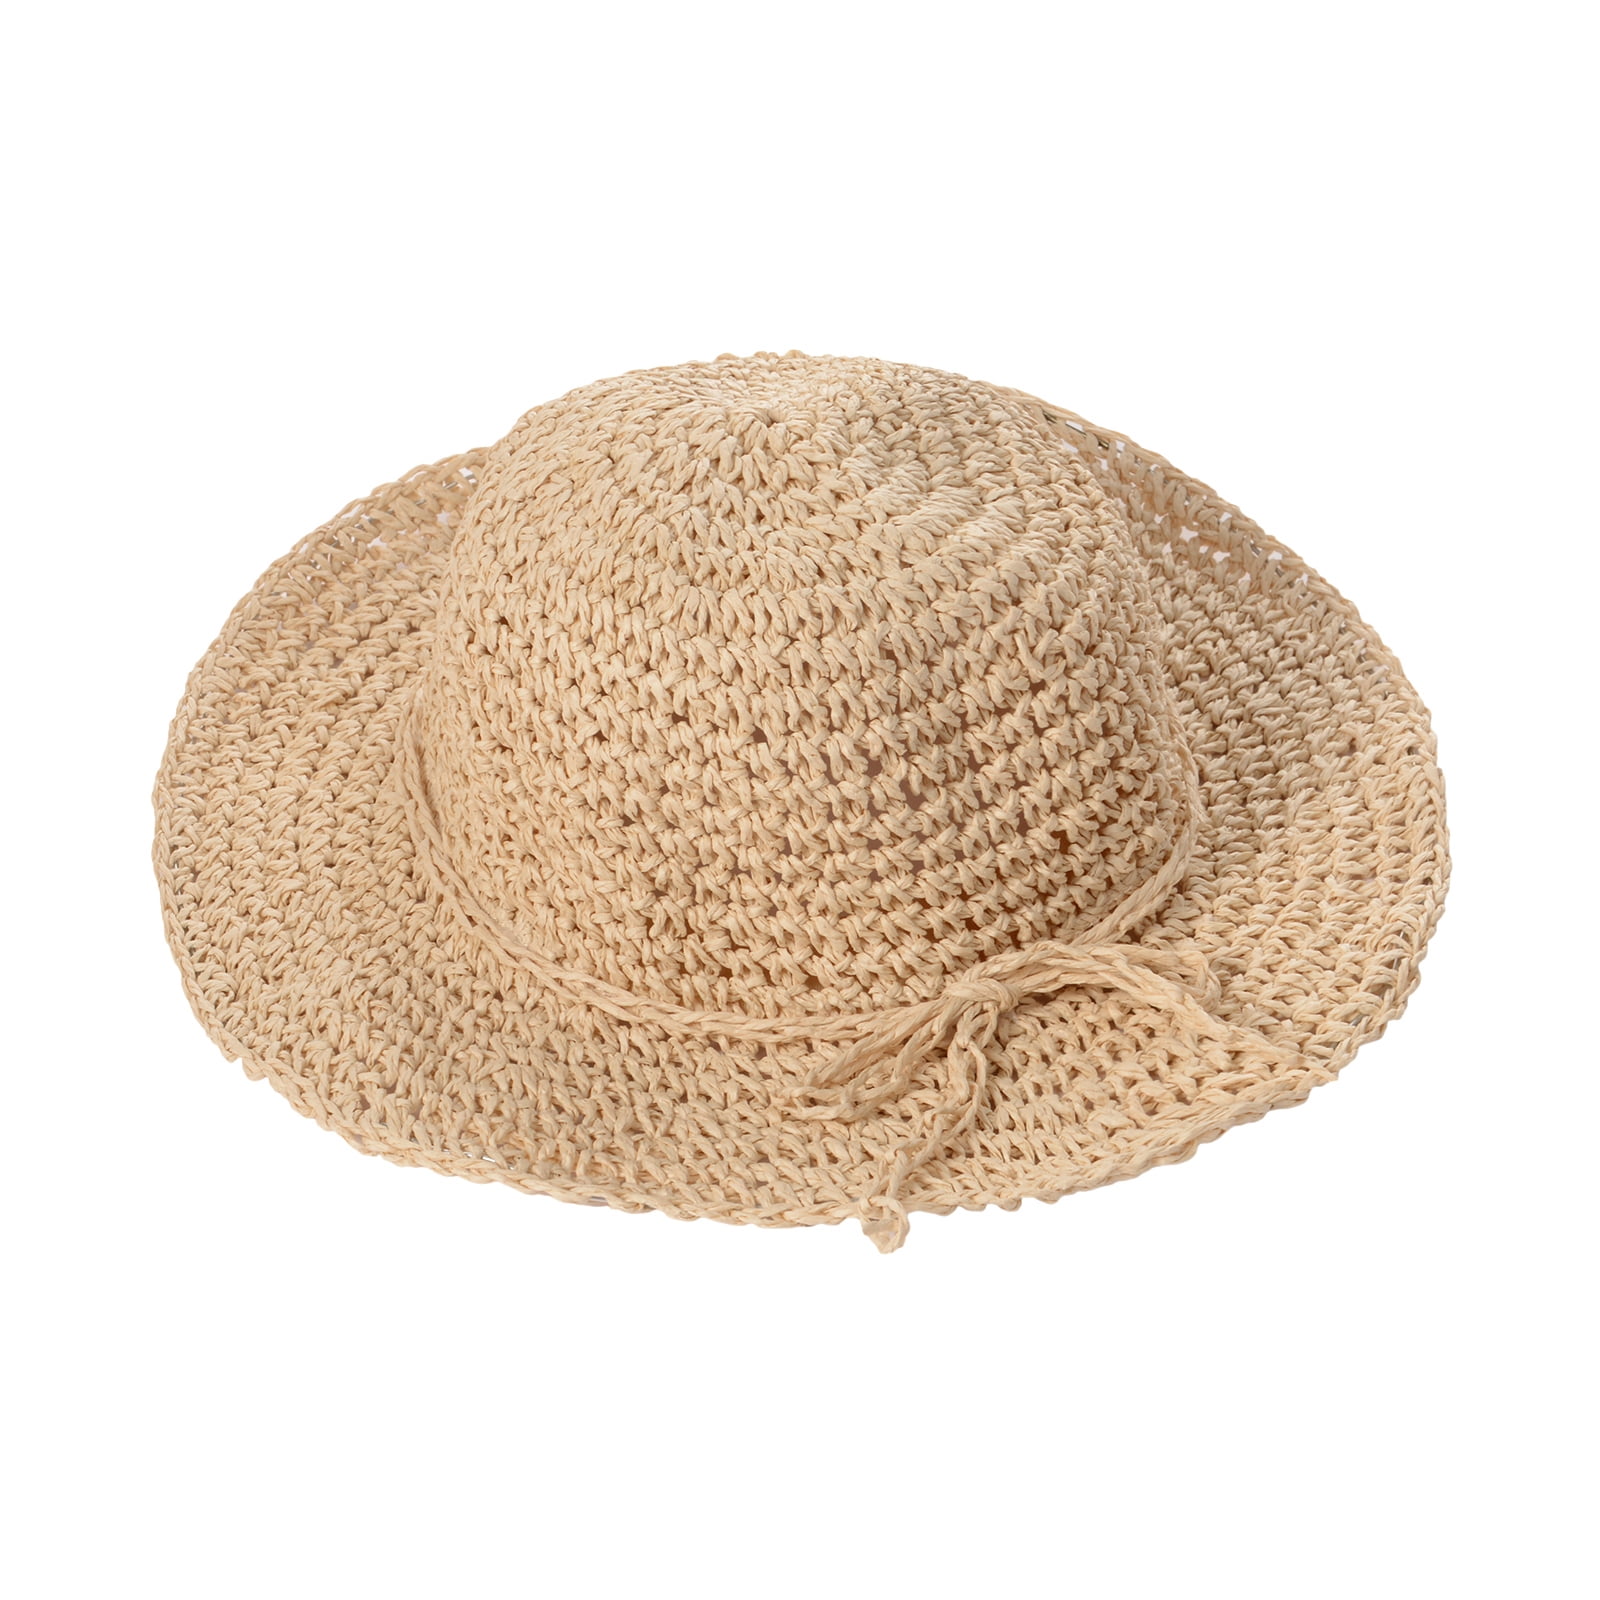 FUNY Girls Large Brim Sunhat Wavy Beach Straw Hat Cute Sun Cap and Hangbag